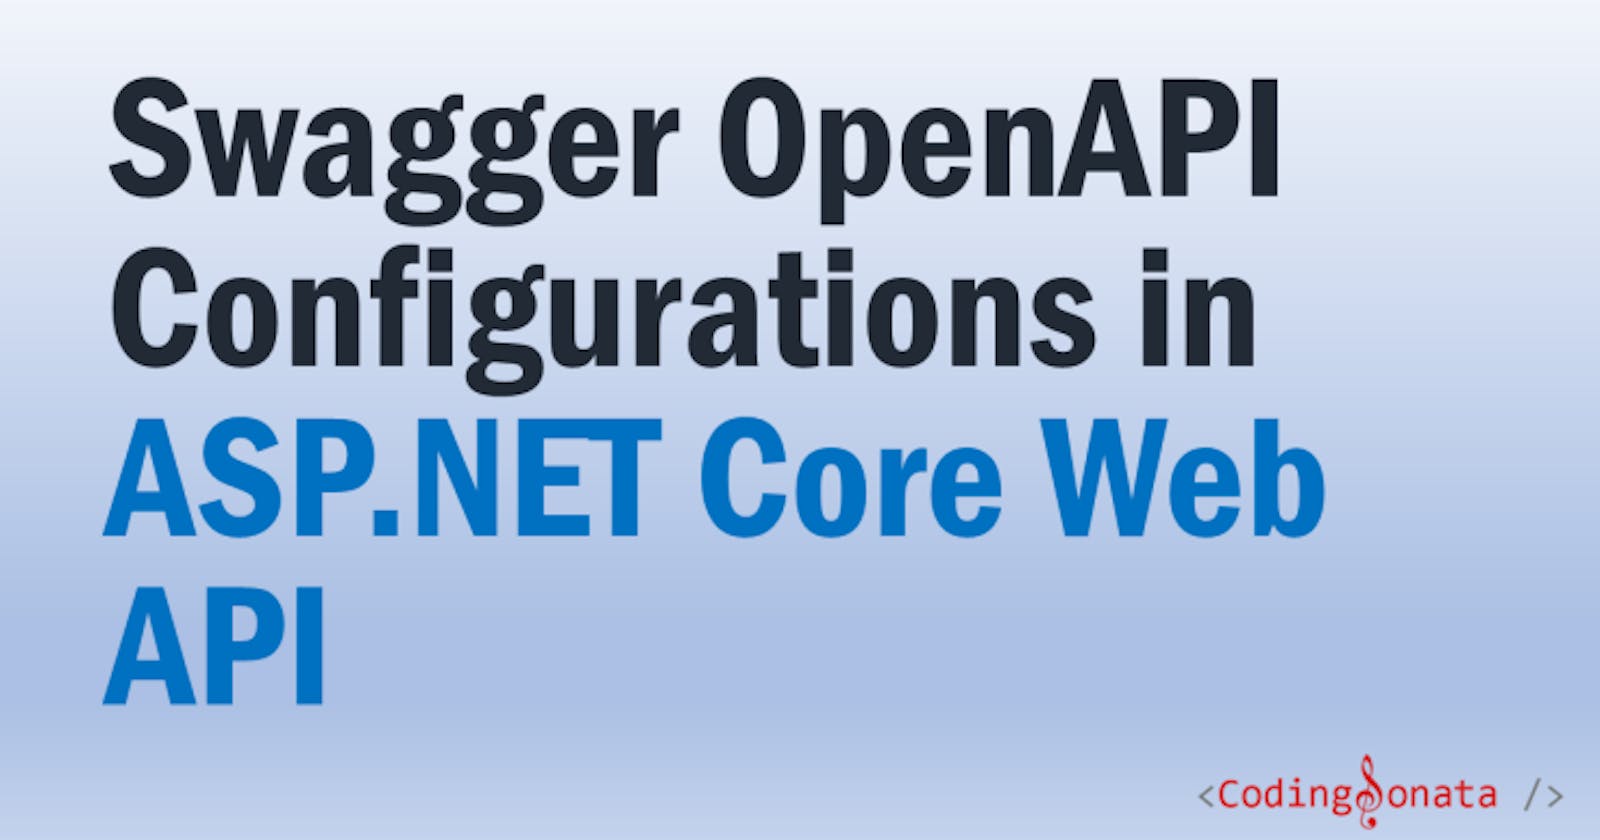 Swagger OpenAPI Configurations in ASP.NET Core Web API